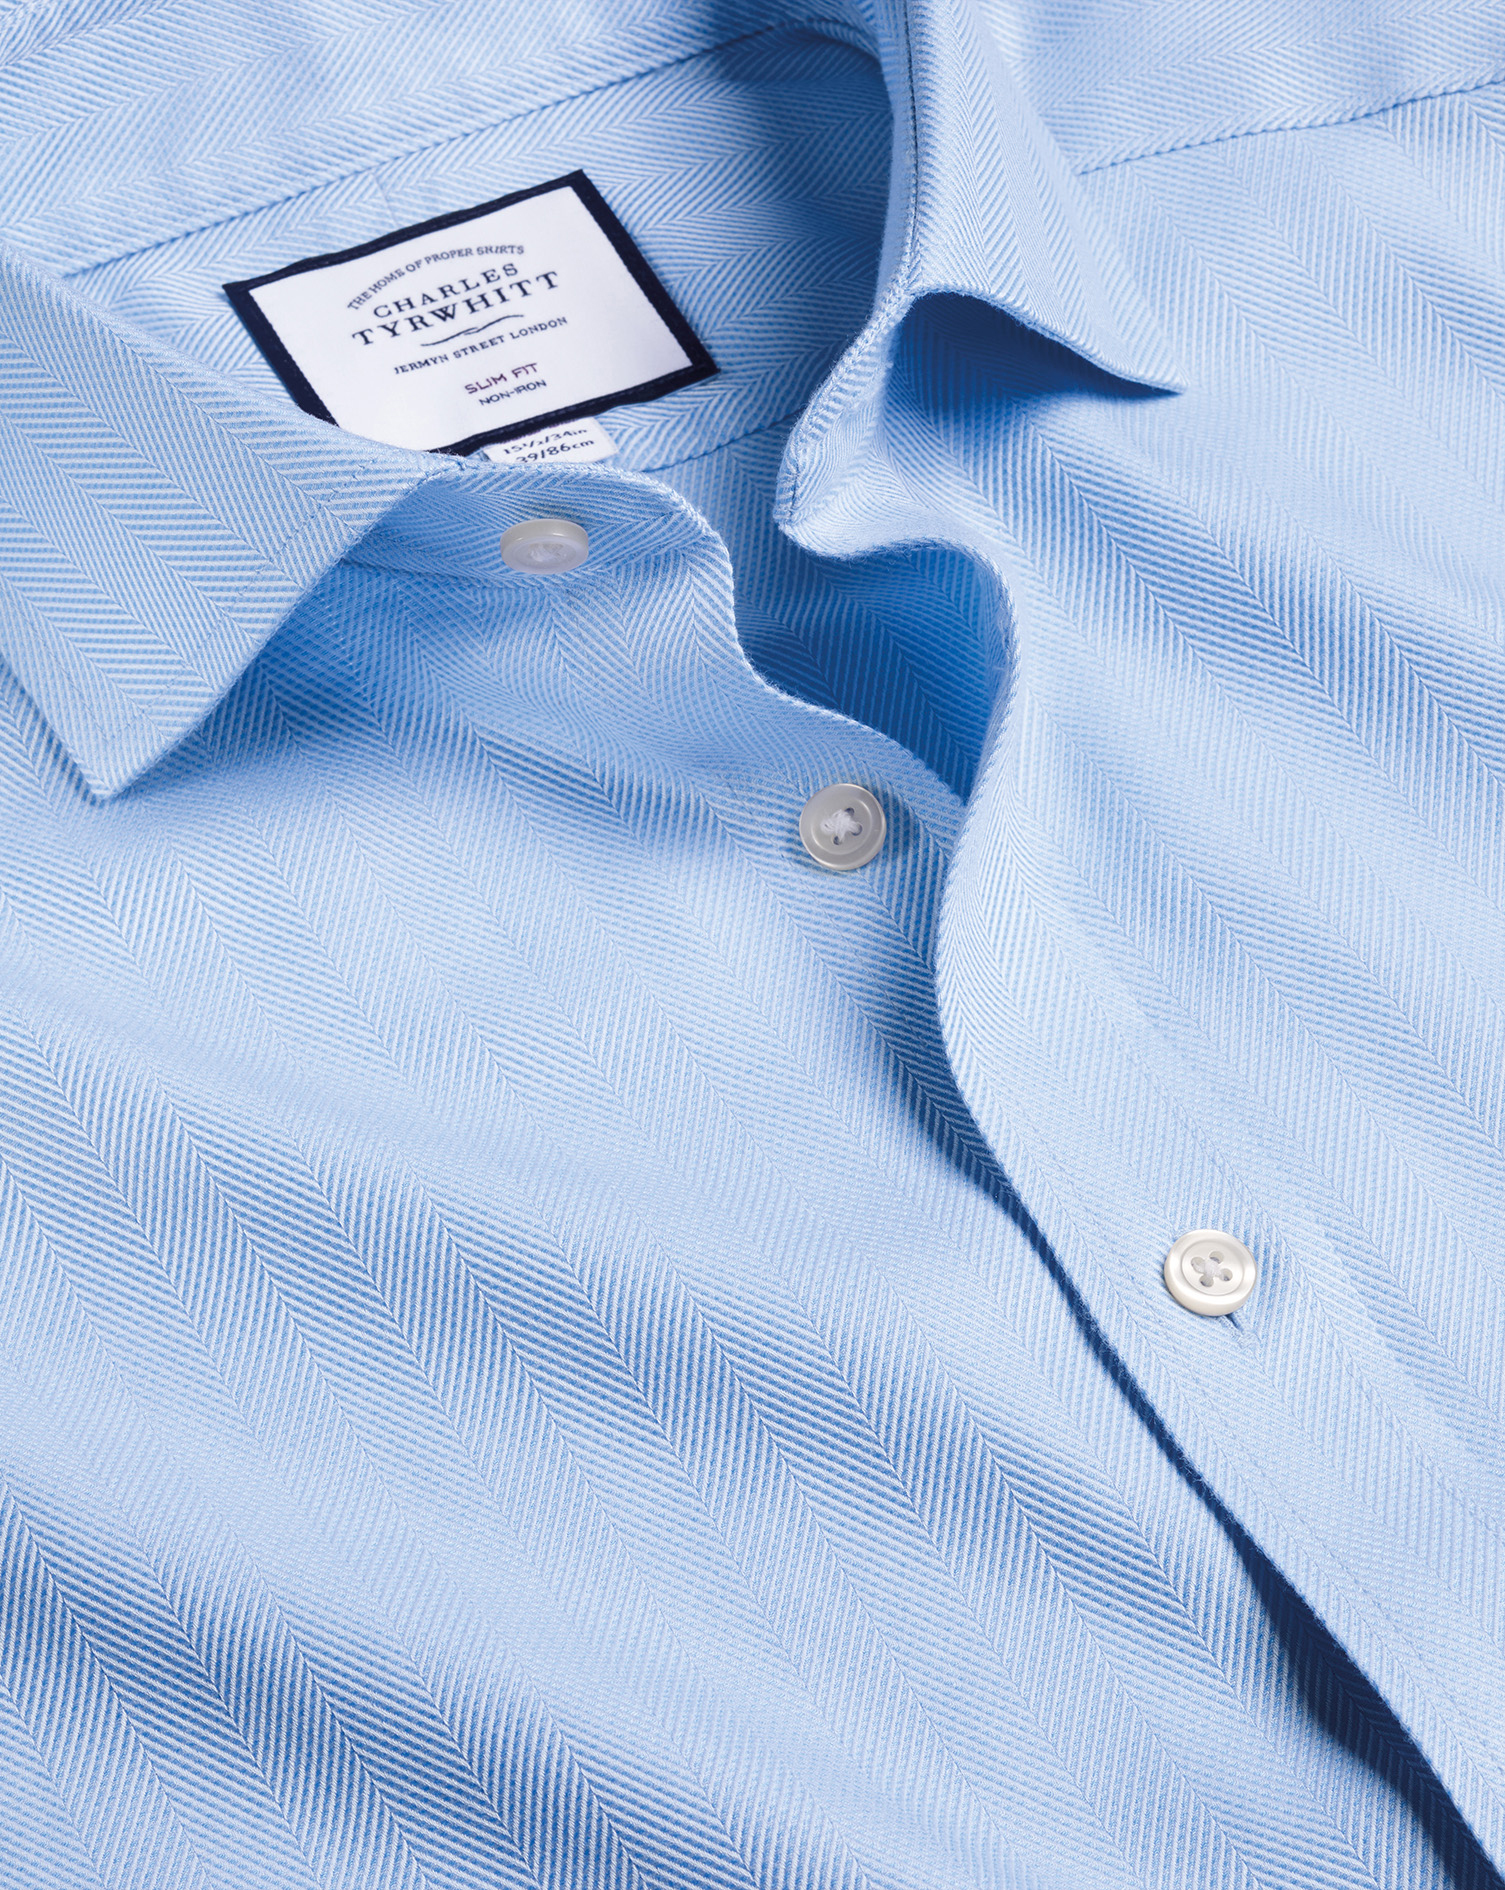 Men's Charles Tyrwhitt Cutaway Collar Non-Iron Herringbone Dress Shirt - Sky Blue Single Cuff Size L